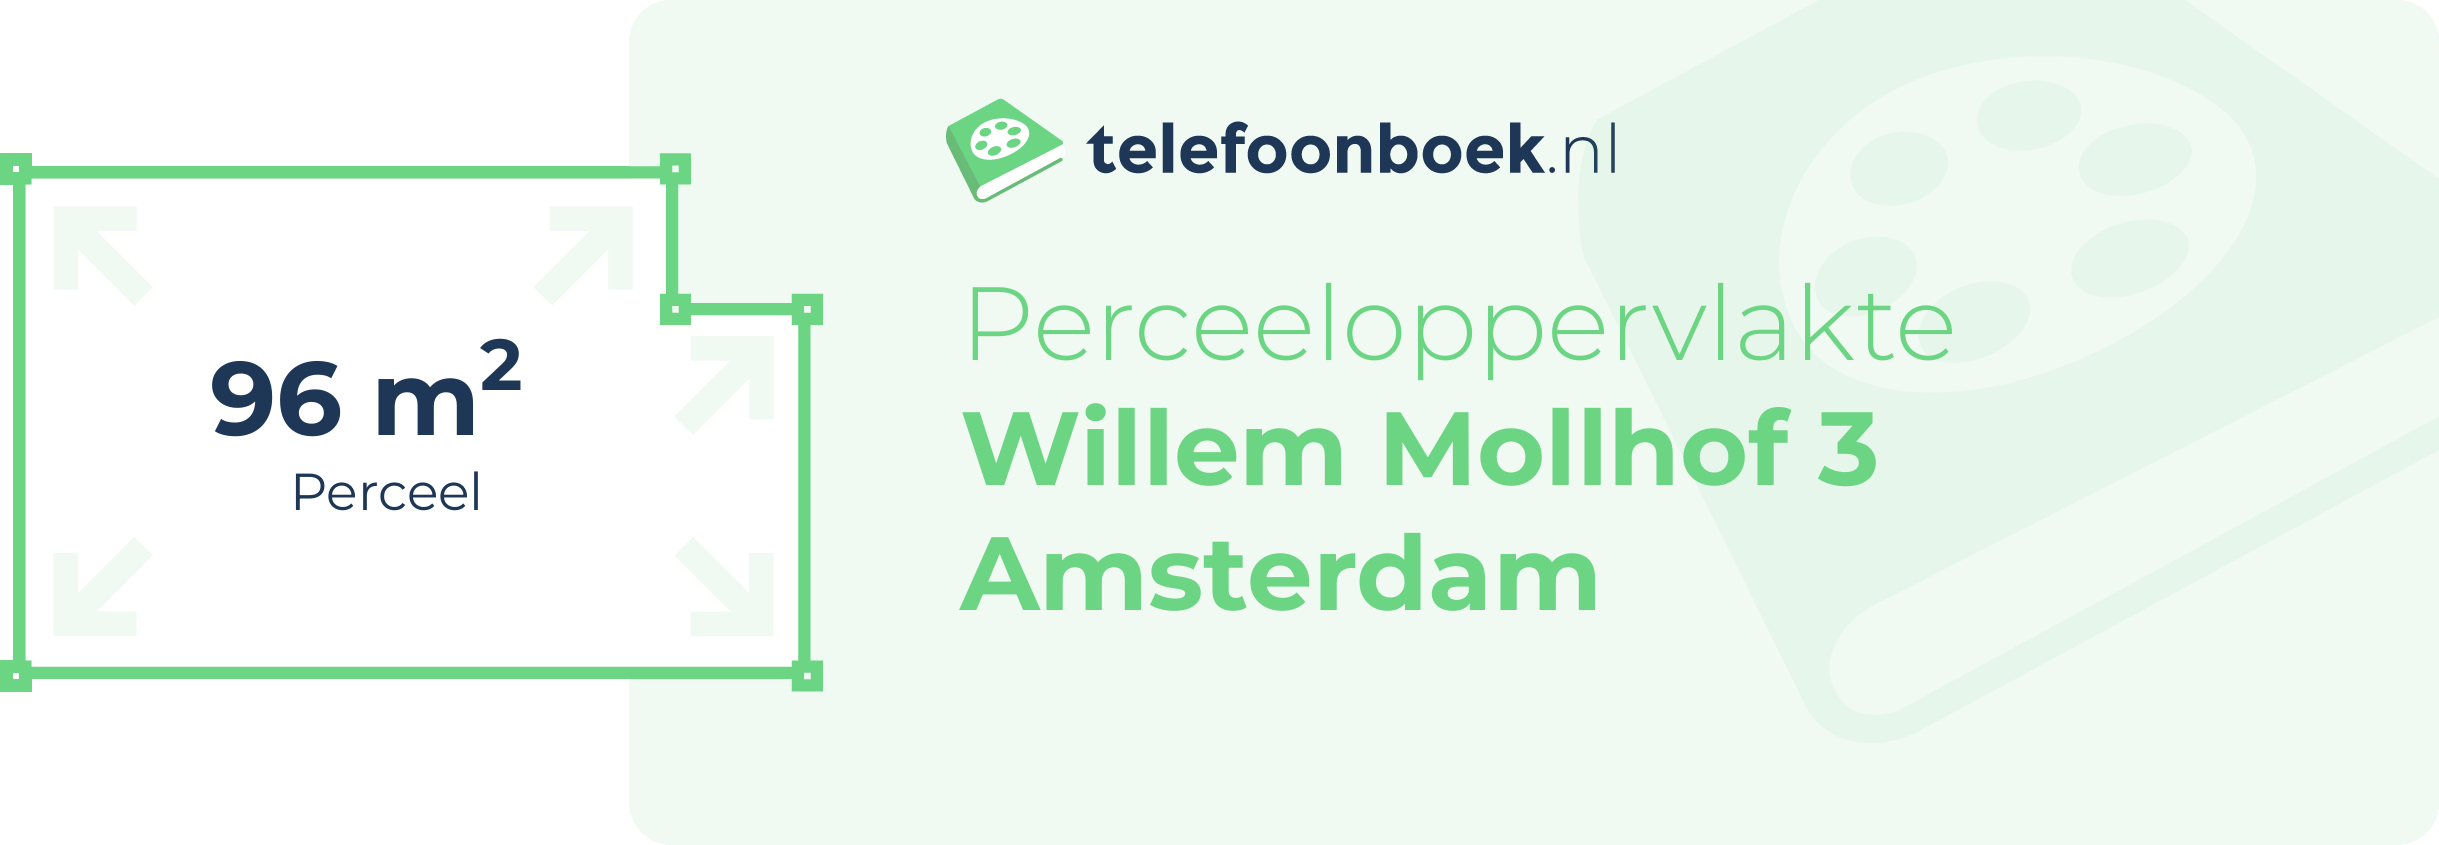 Perceeloppervlakte Willem Mollhof 3 Amsterdam